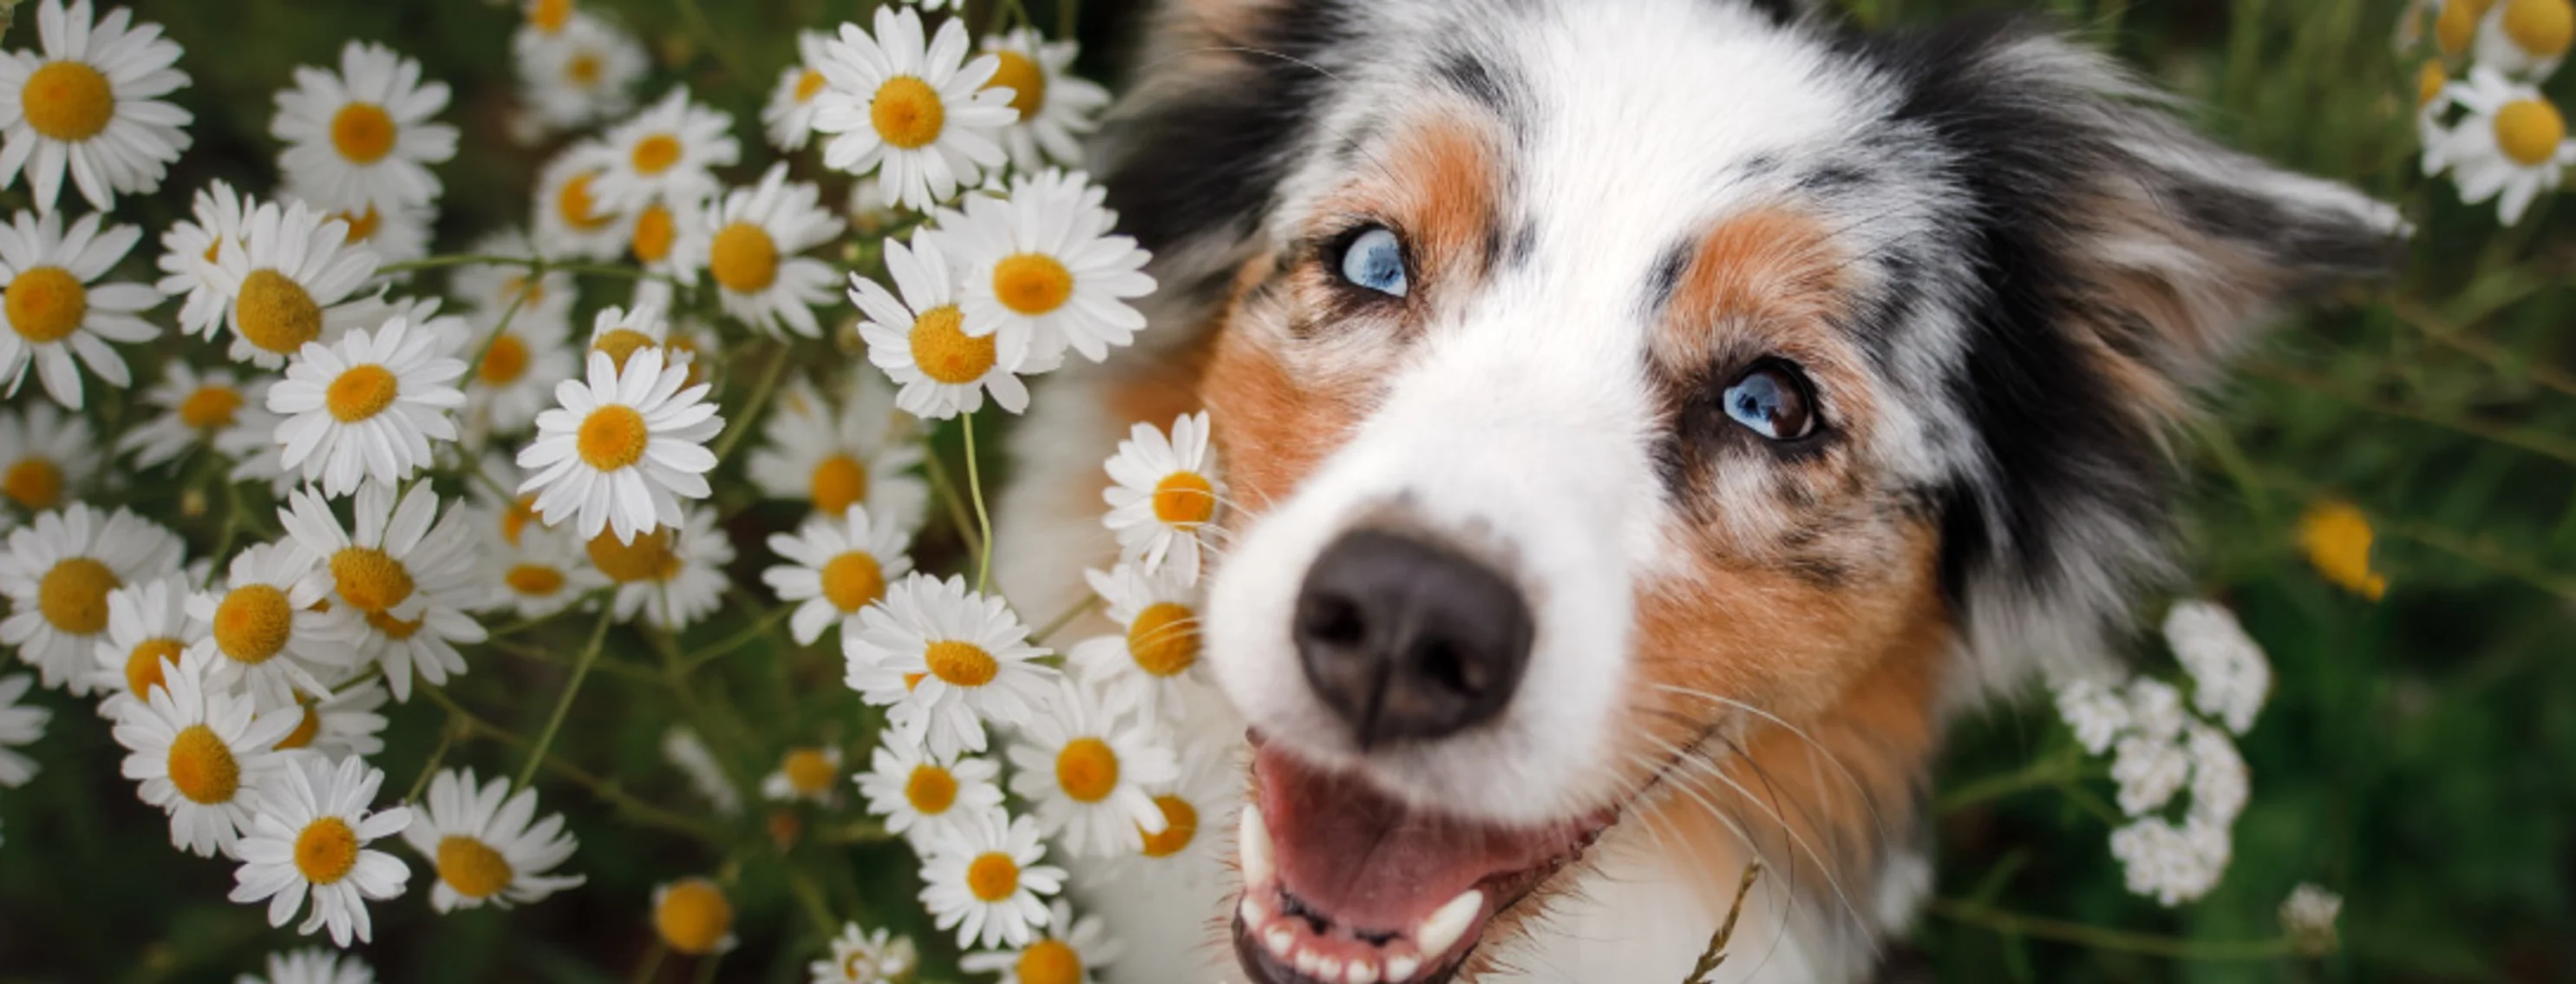  Blue eyed dog with flowers